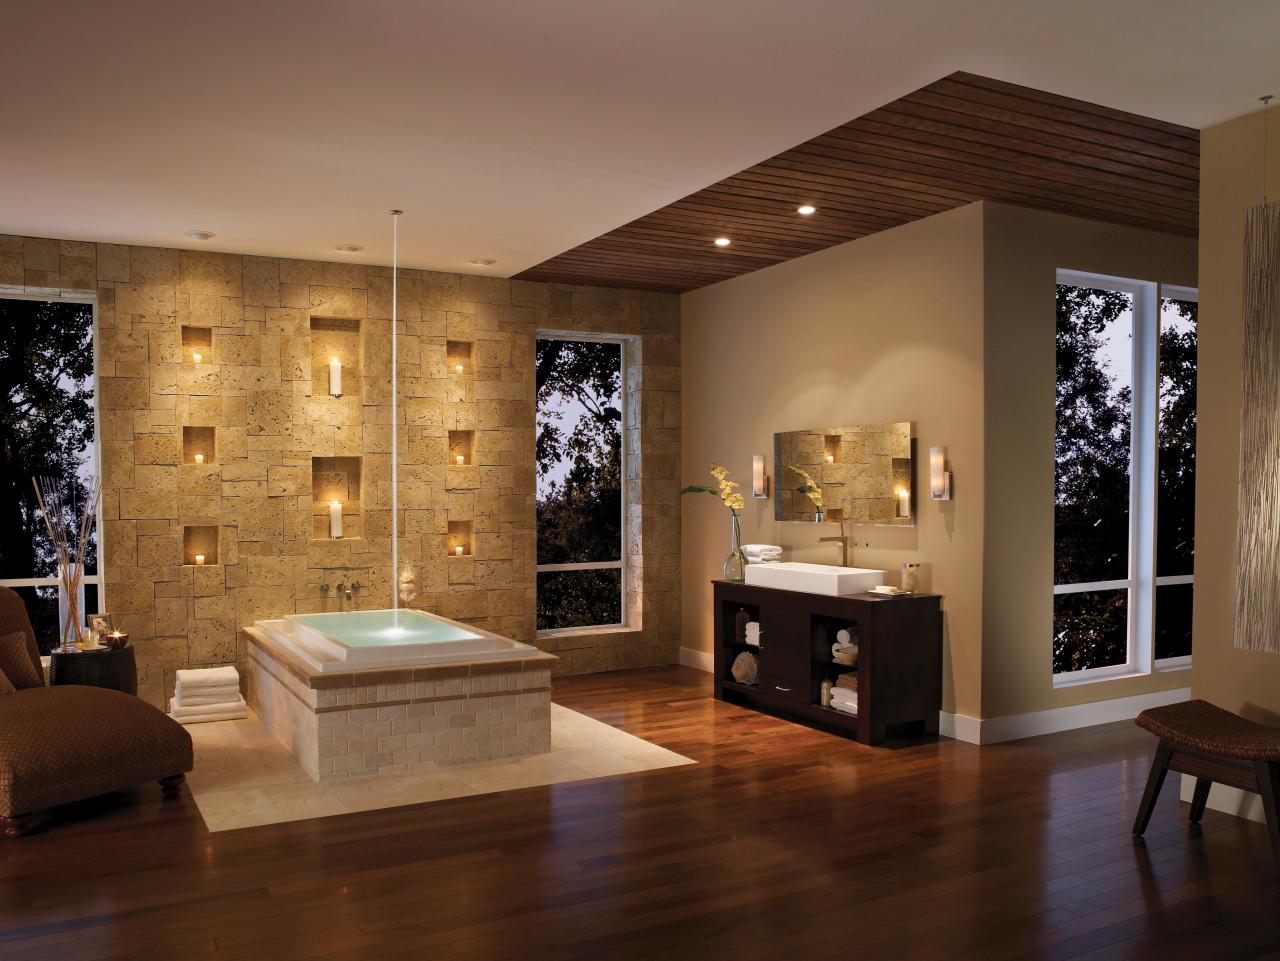 spa-inspired master bathrooms | bathroom design - choose